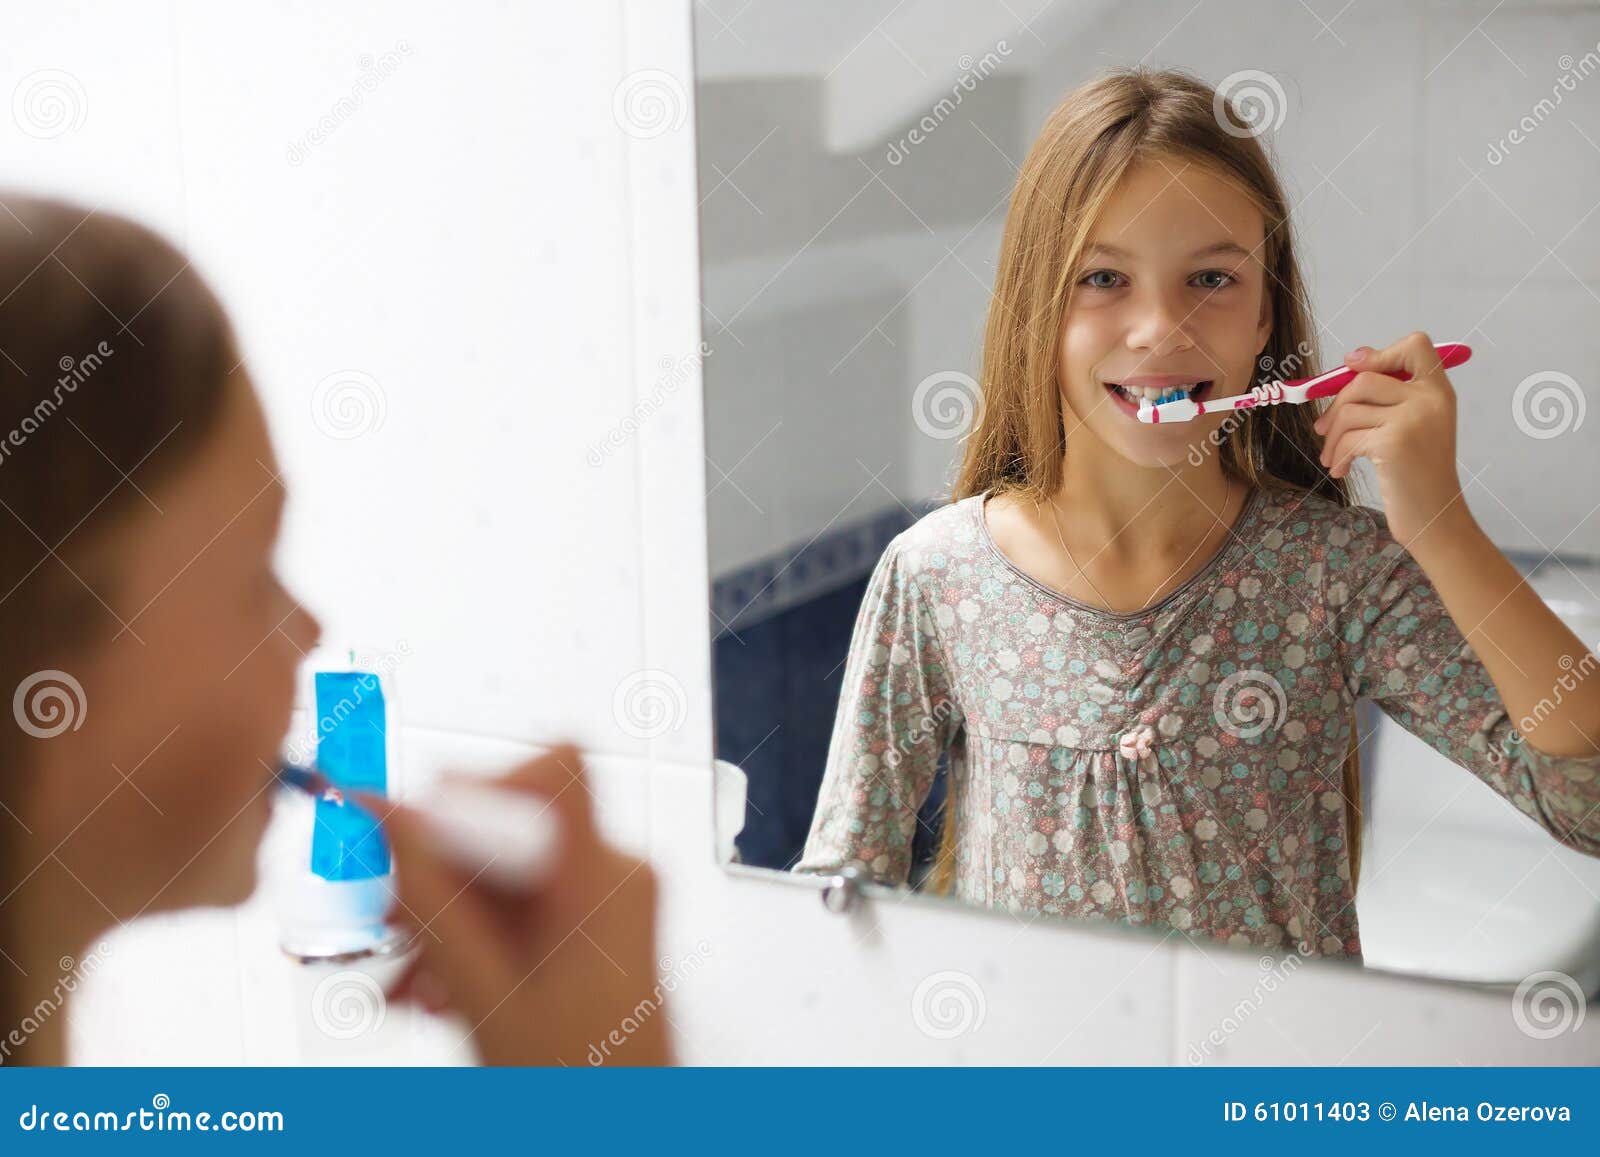 Girl Brushing Her Teeth Stock Image Image Of Dental 61011403